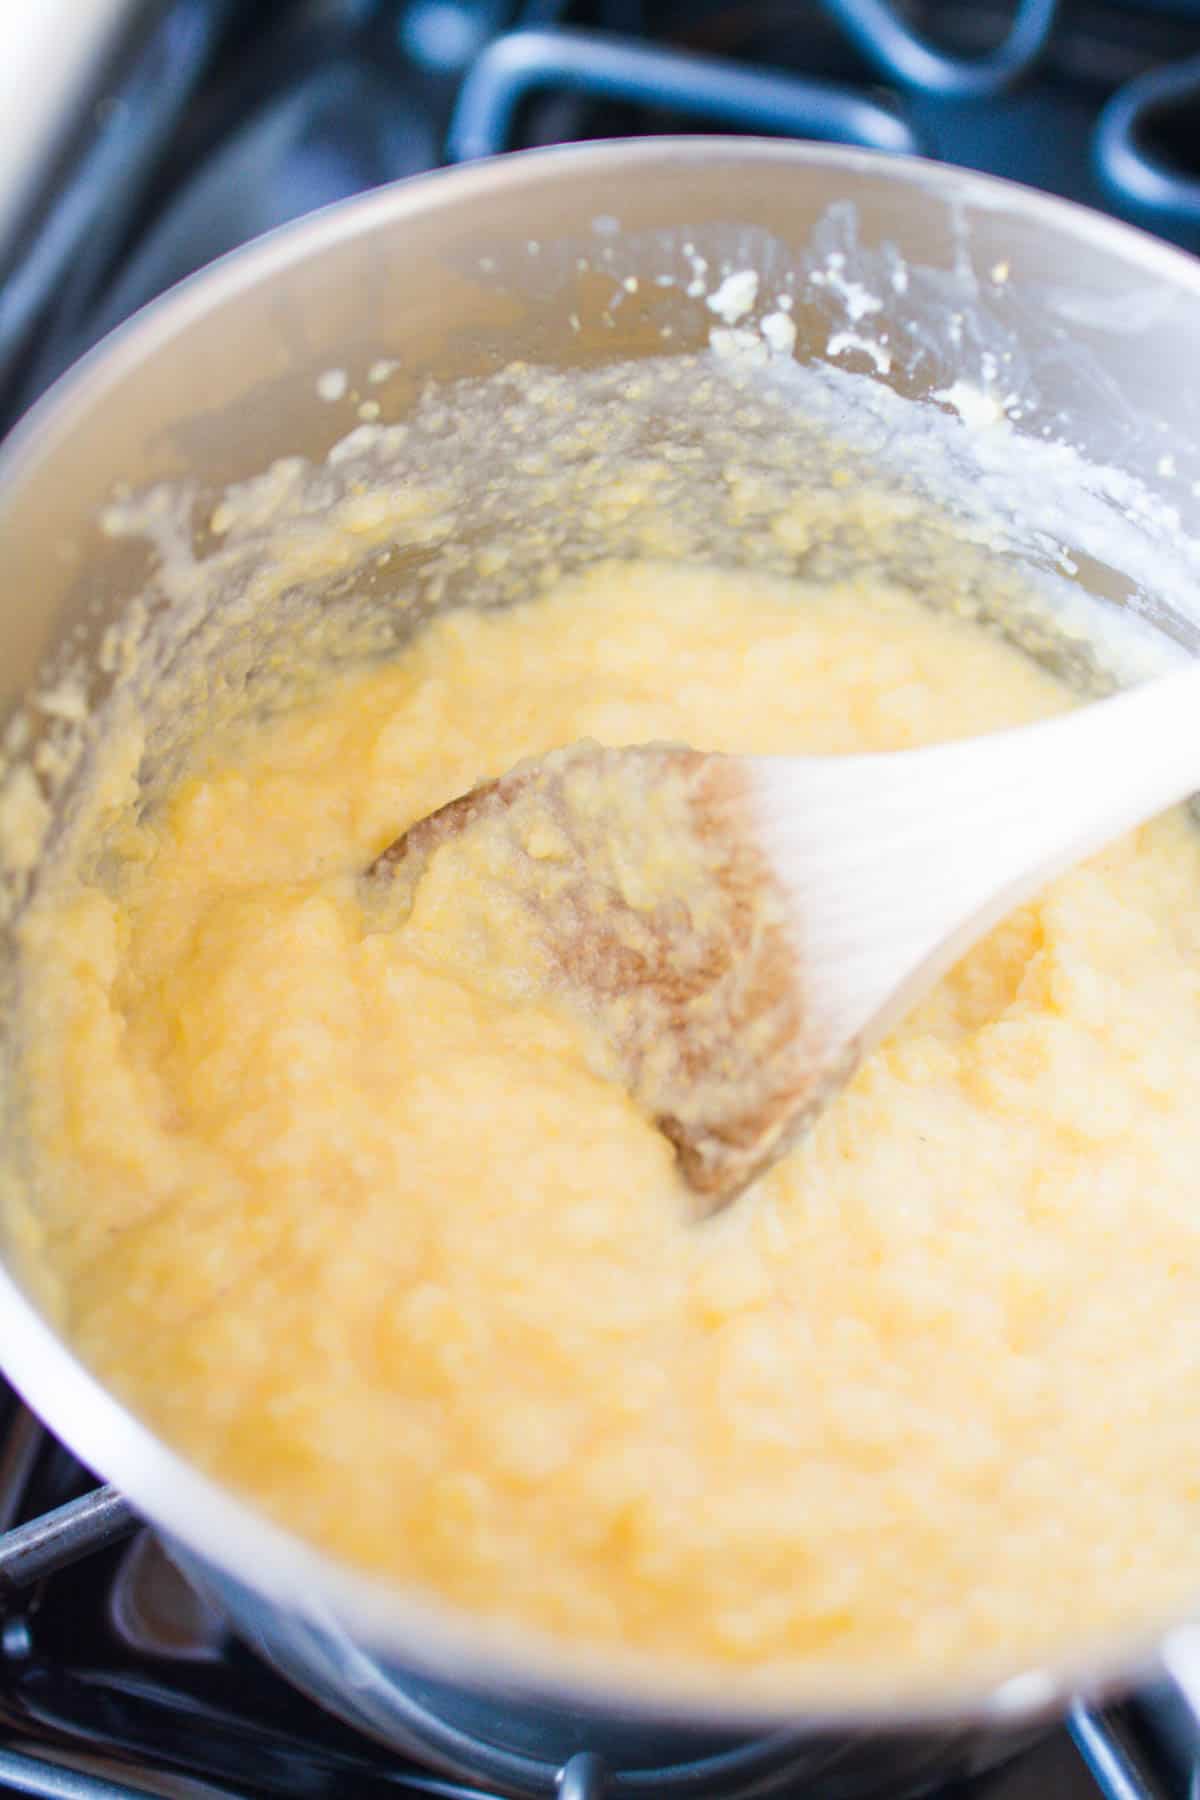 Creamy polenta in a saucepan on the stove.